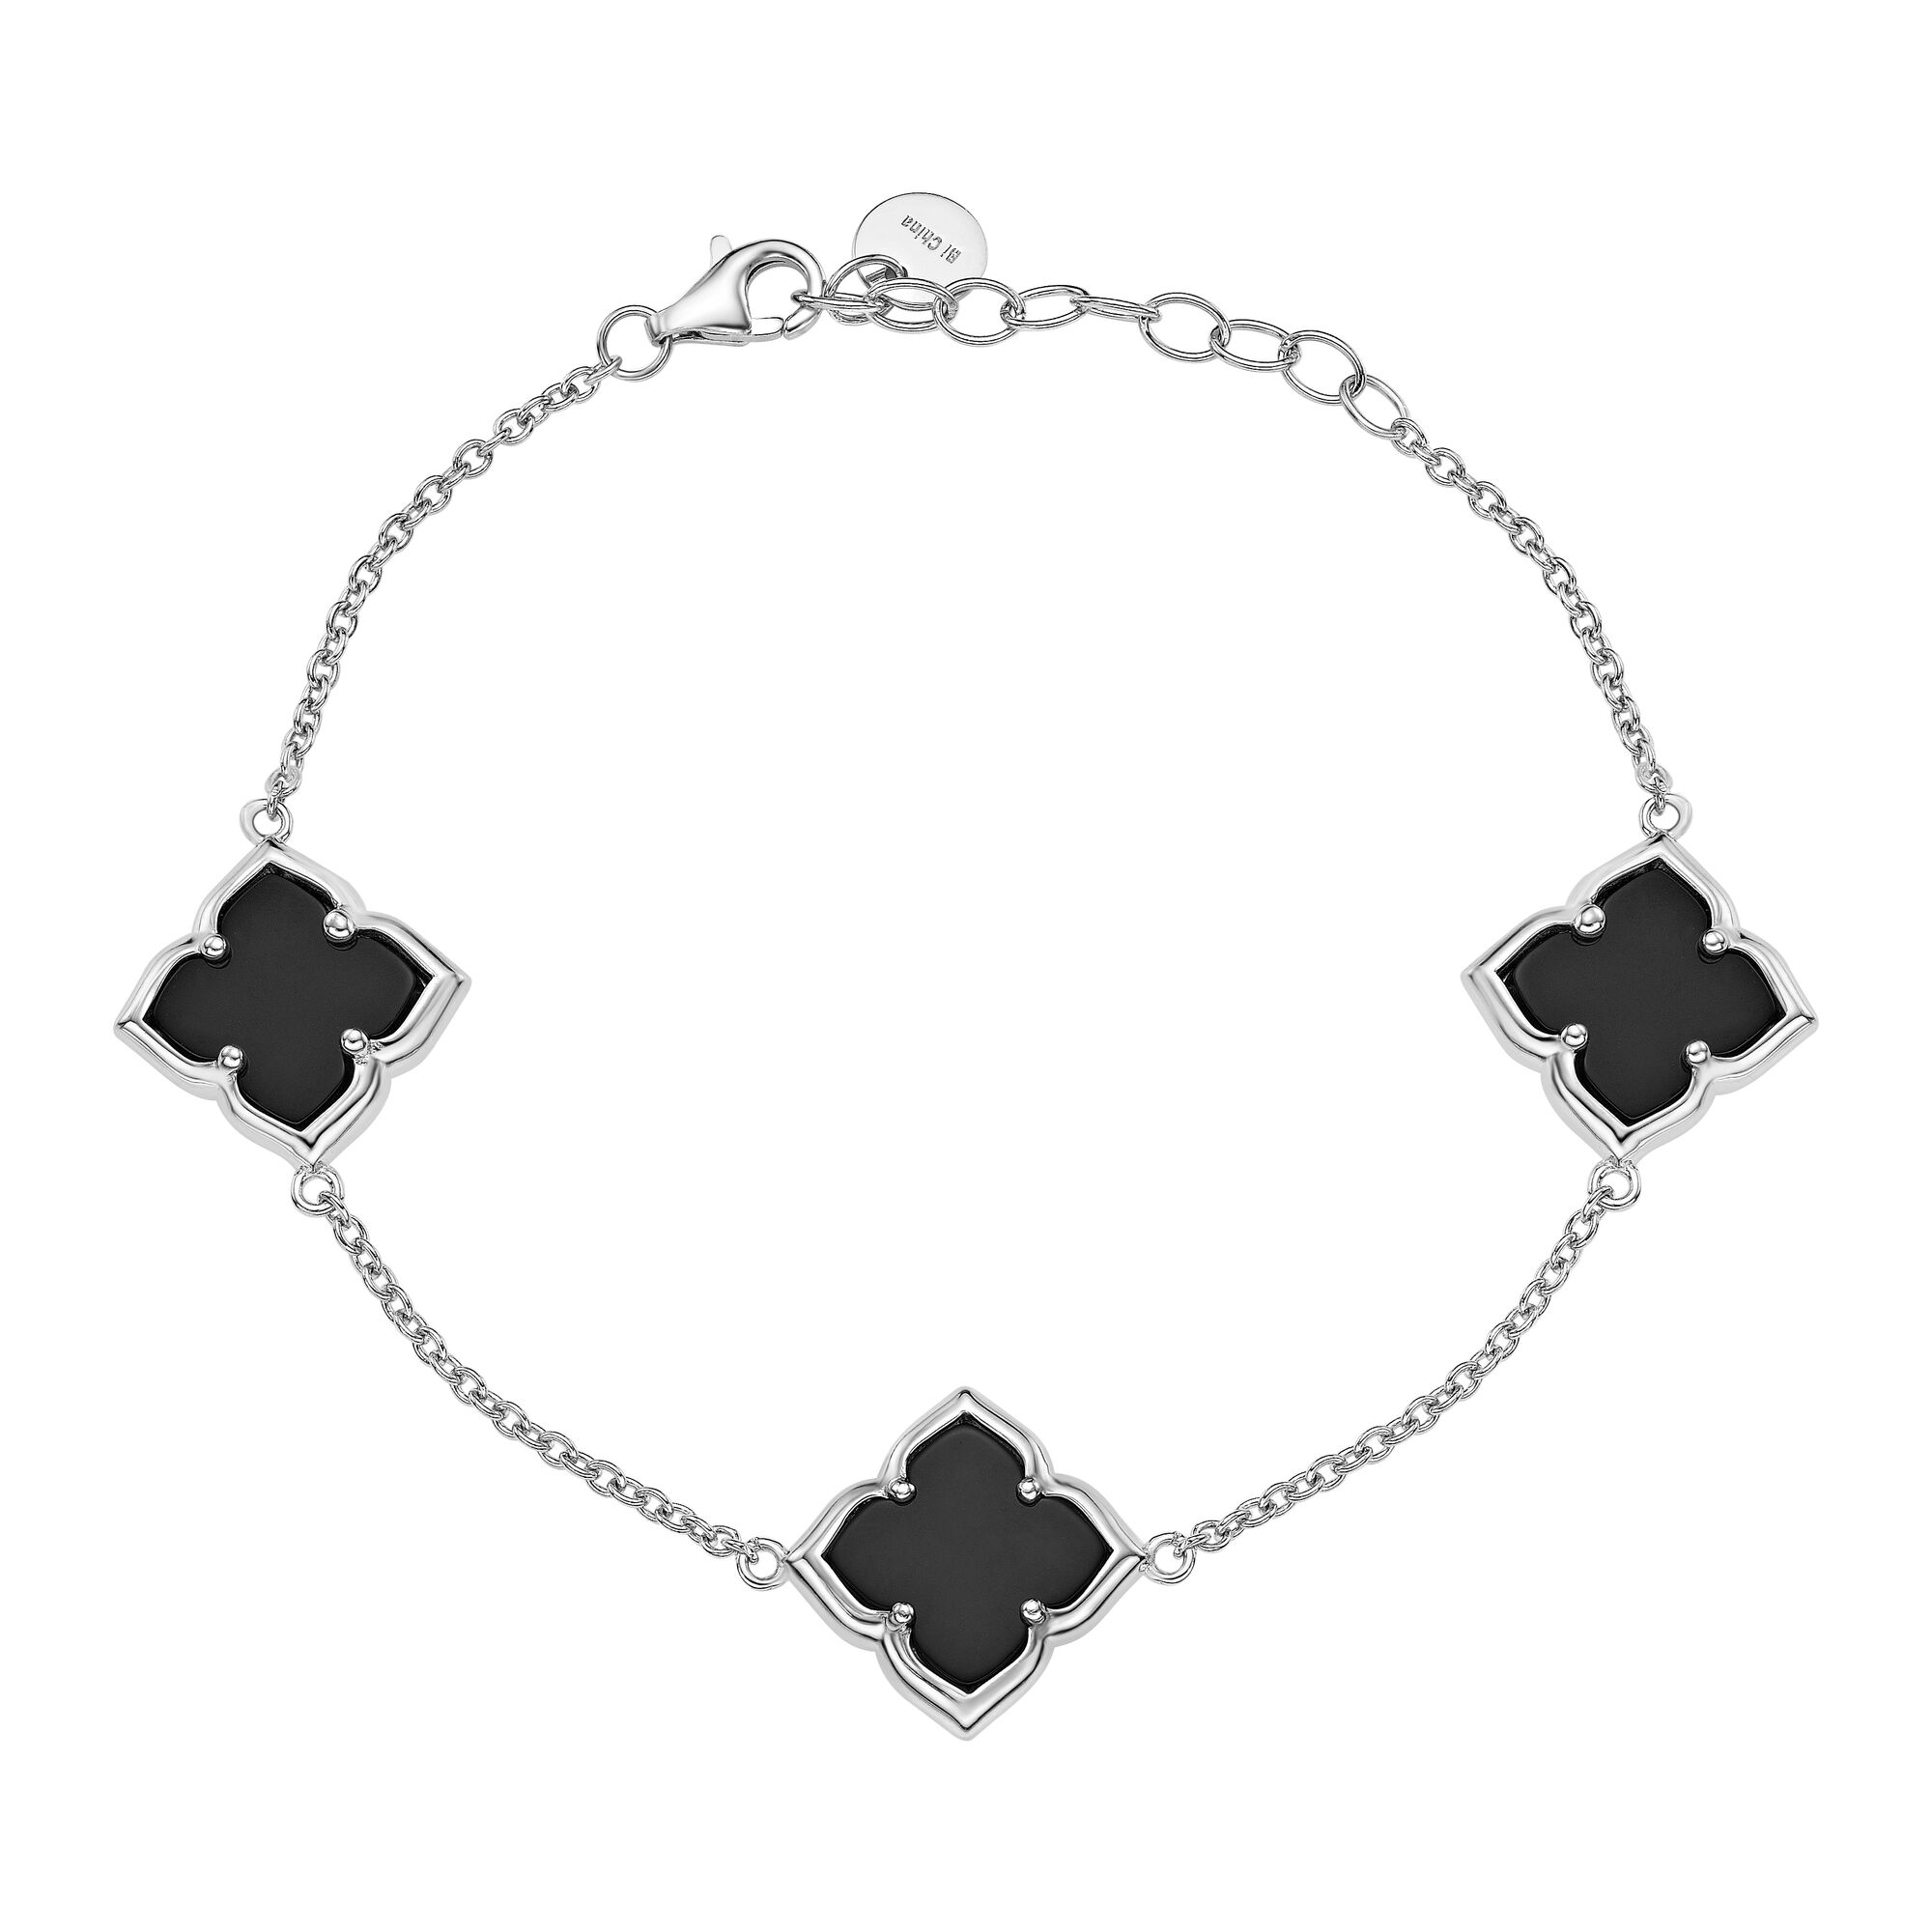 52184-bracelet-flora-sterling-silver-52184-2-1.jpg